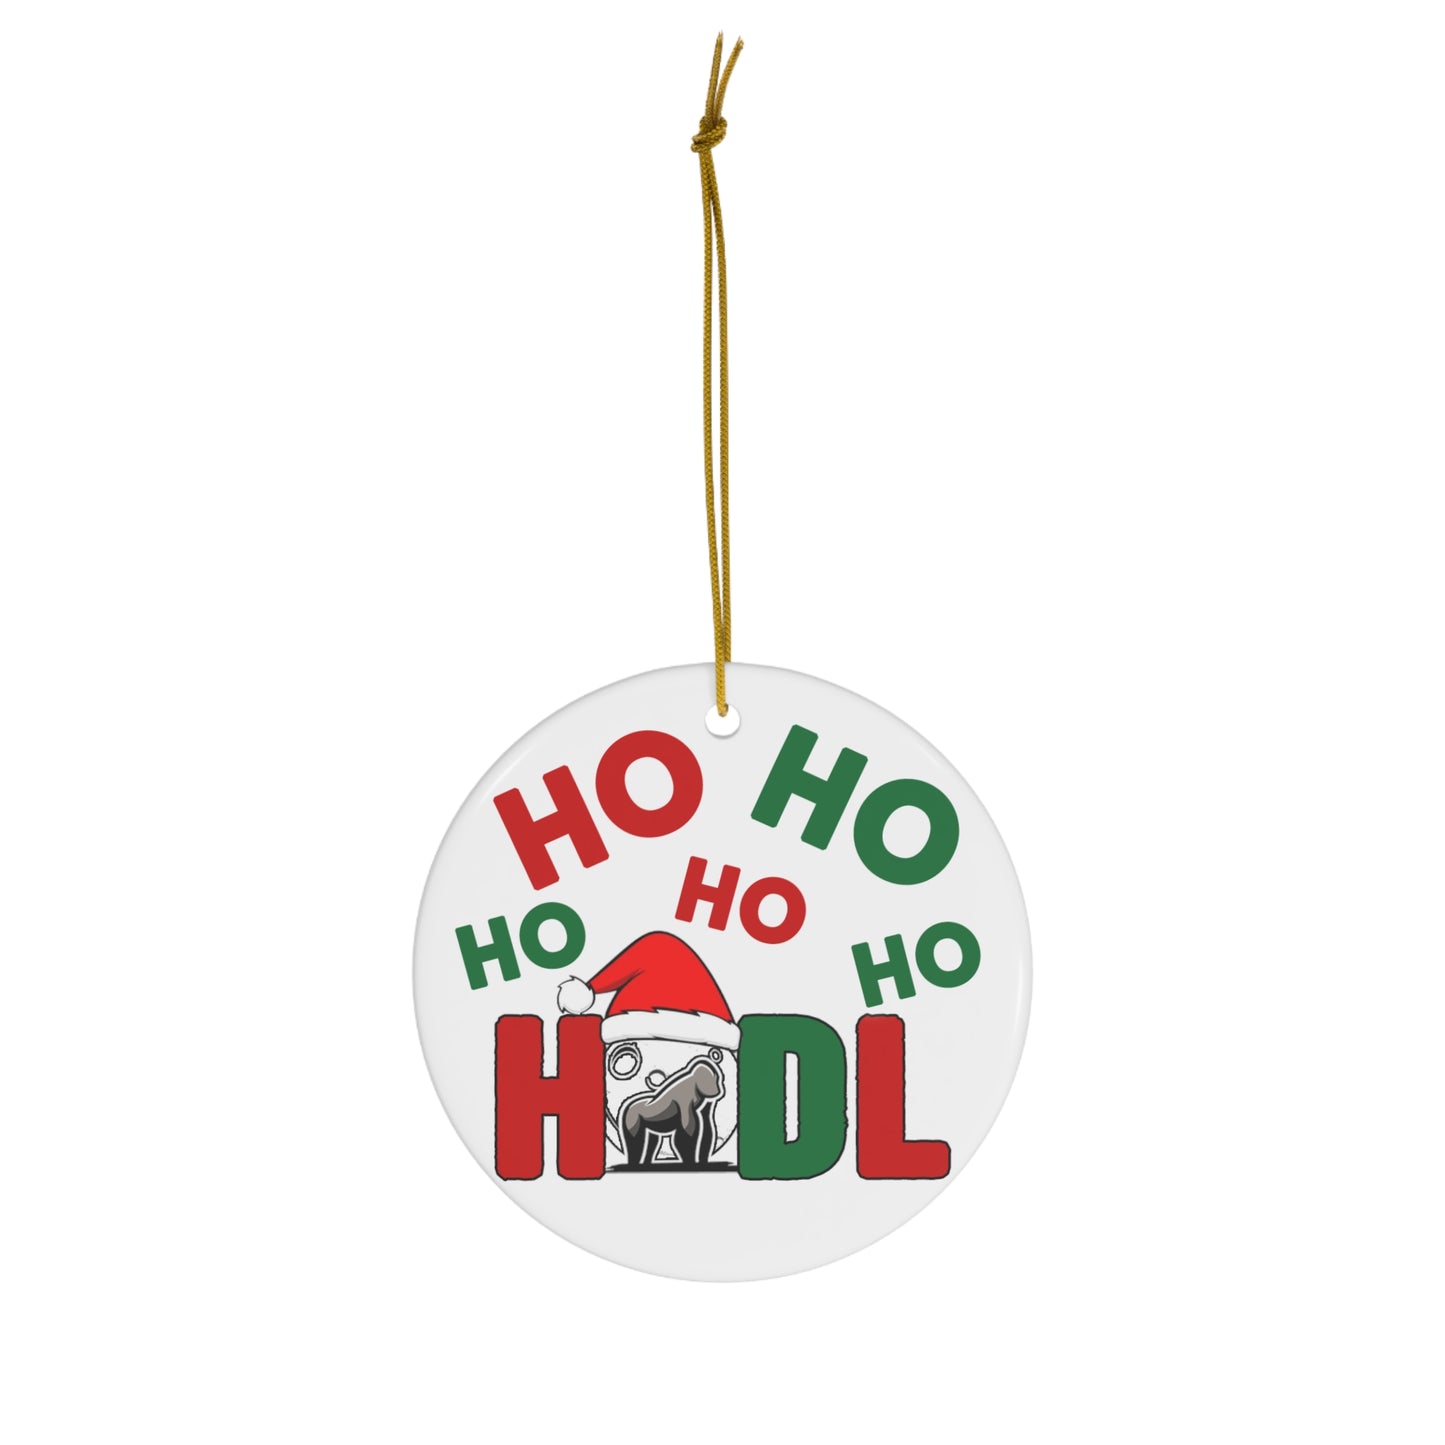 Ho Ho Ho Hodl Christmas Ornament - Ape Strong Hodl to the Moon Diamond Hands Ornament